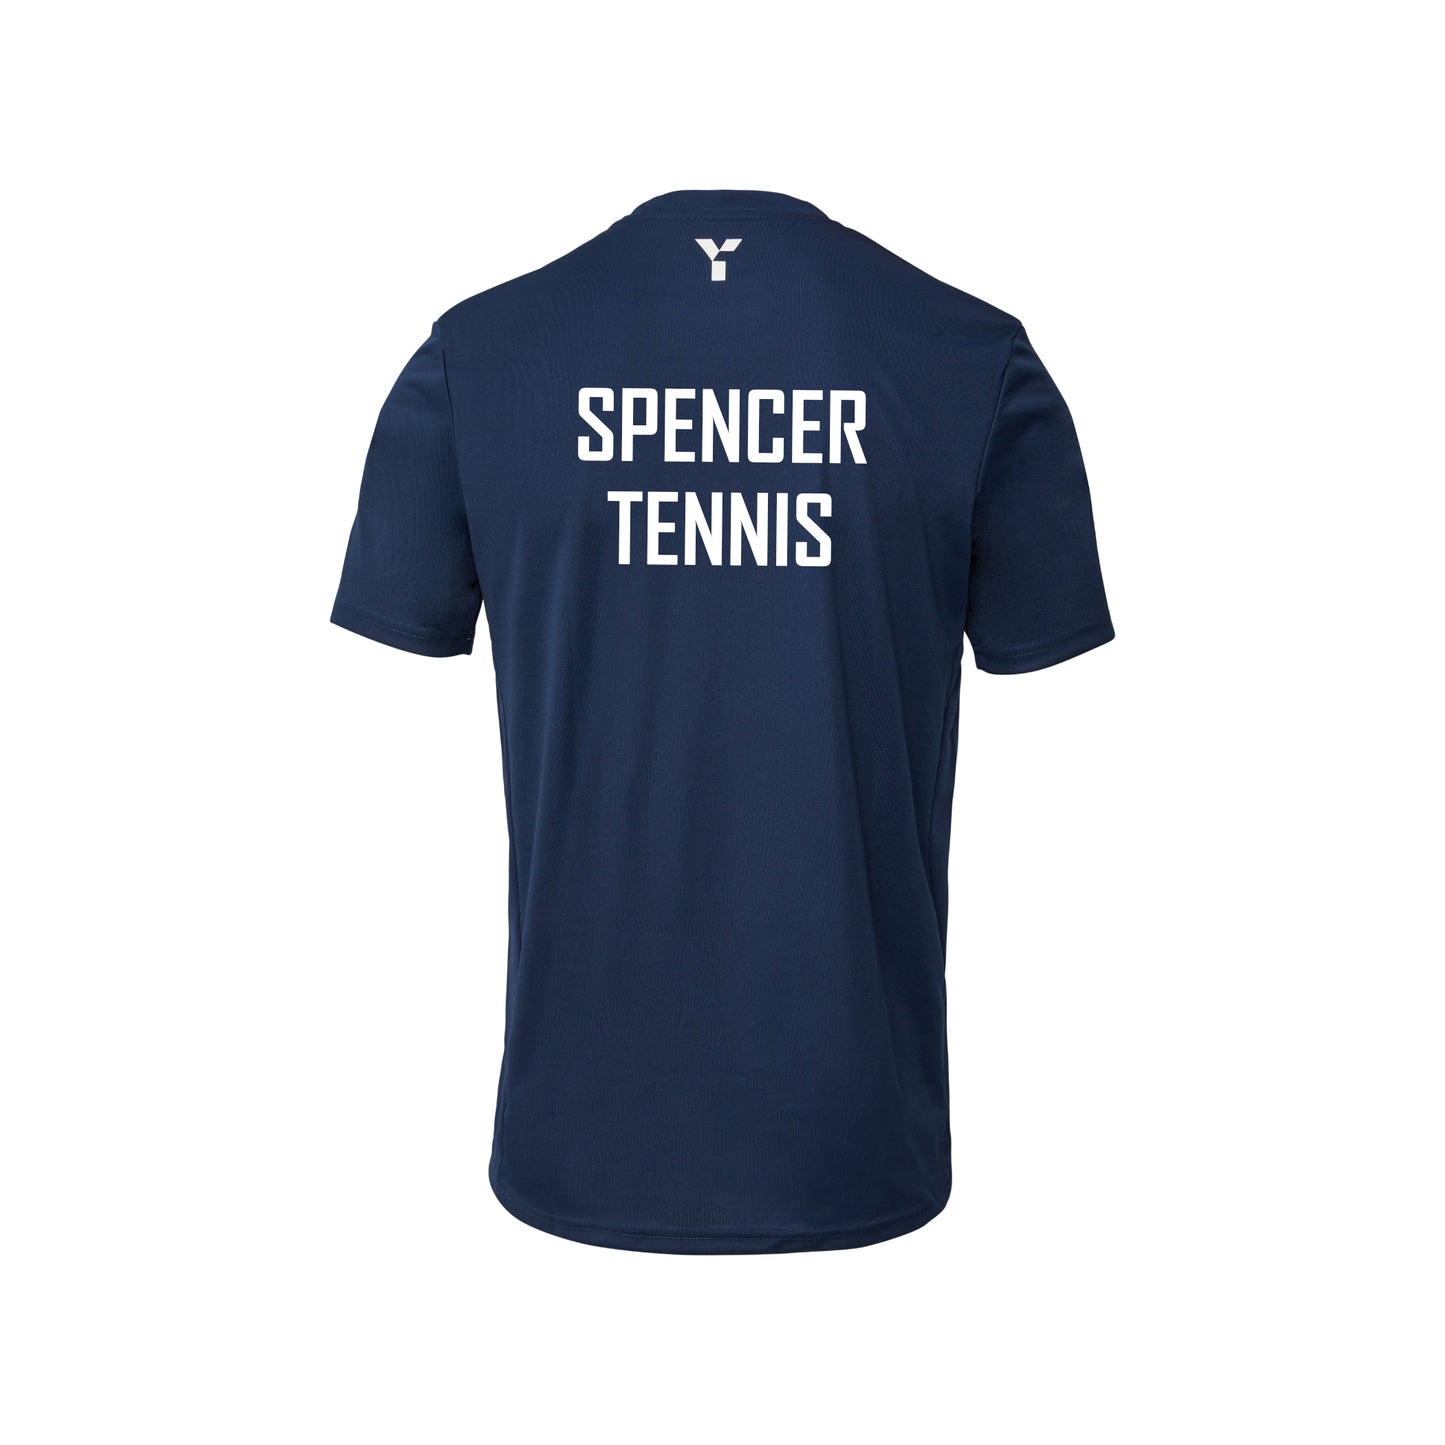 Spencer Tennis - Short Sleeve Training Top Womens Navy